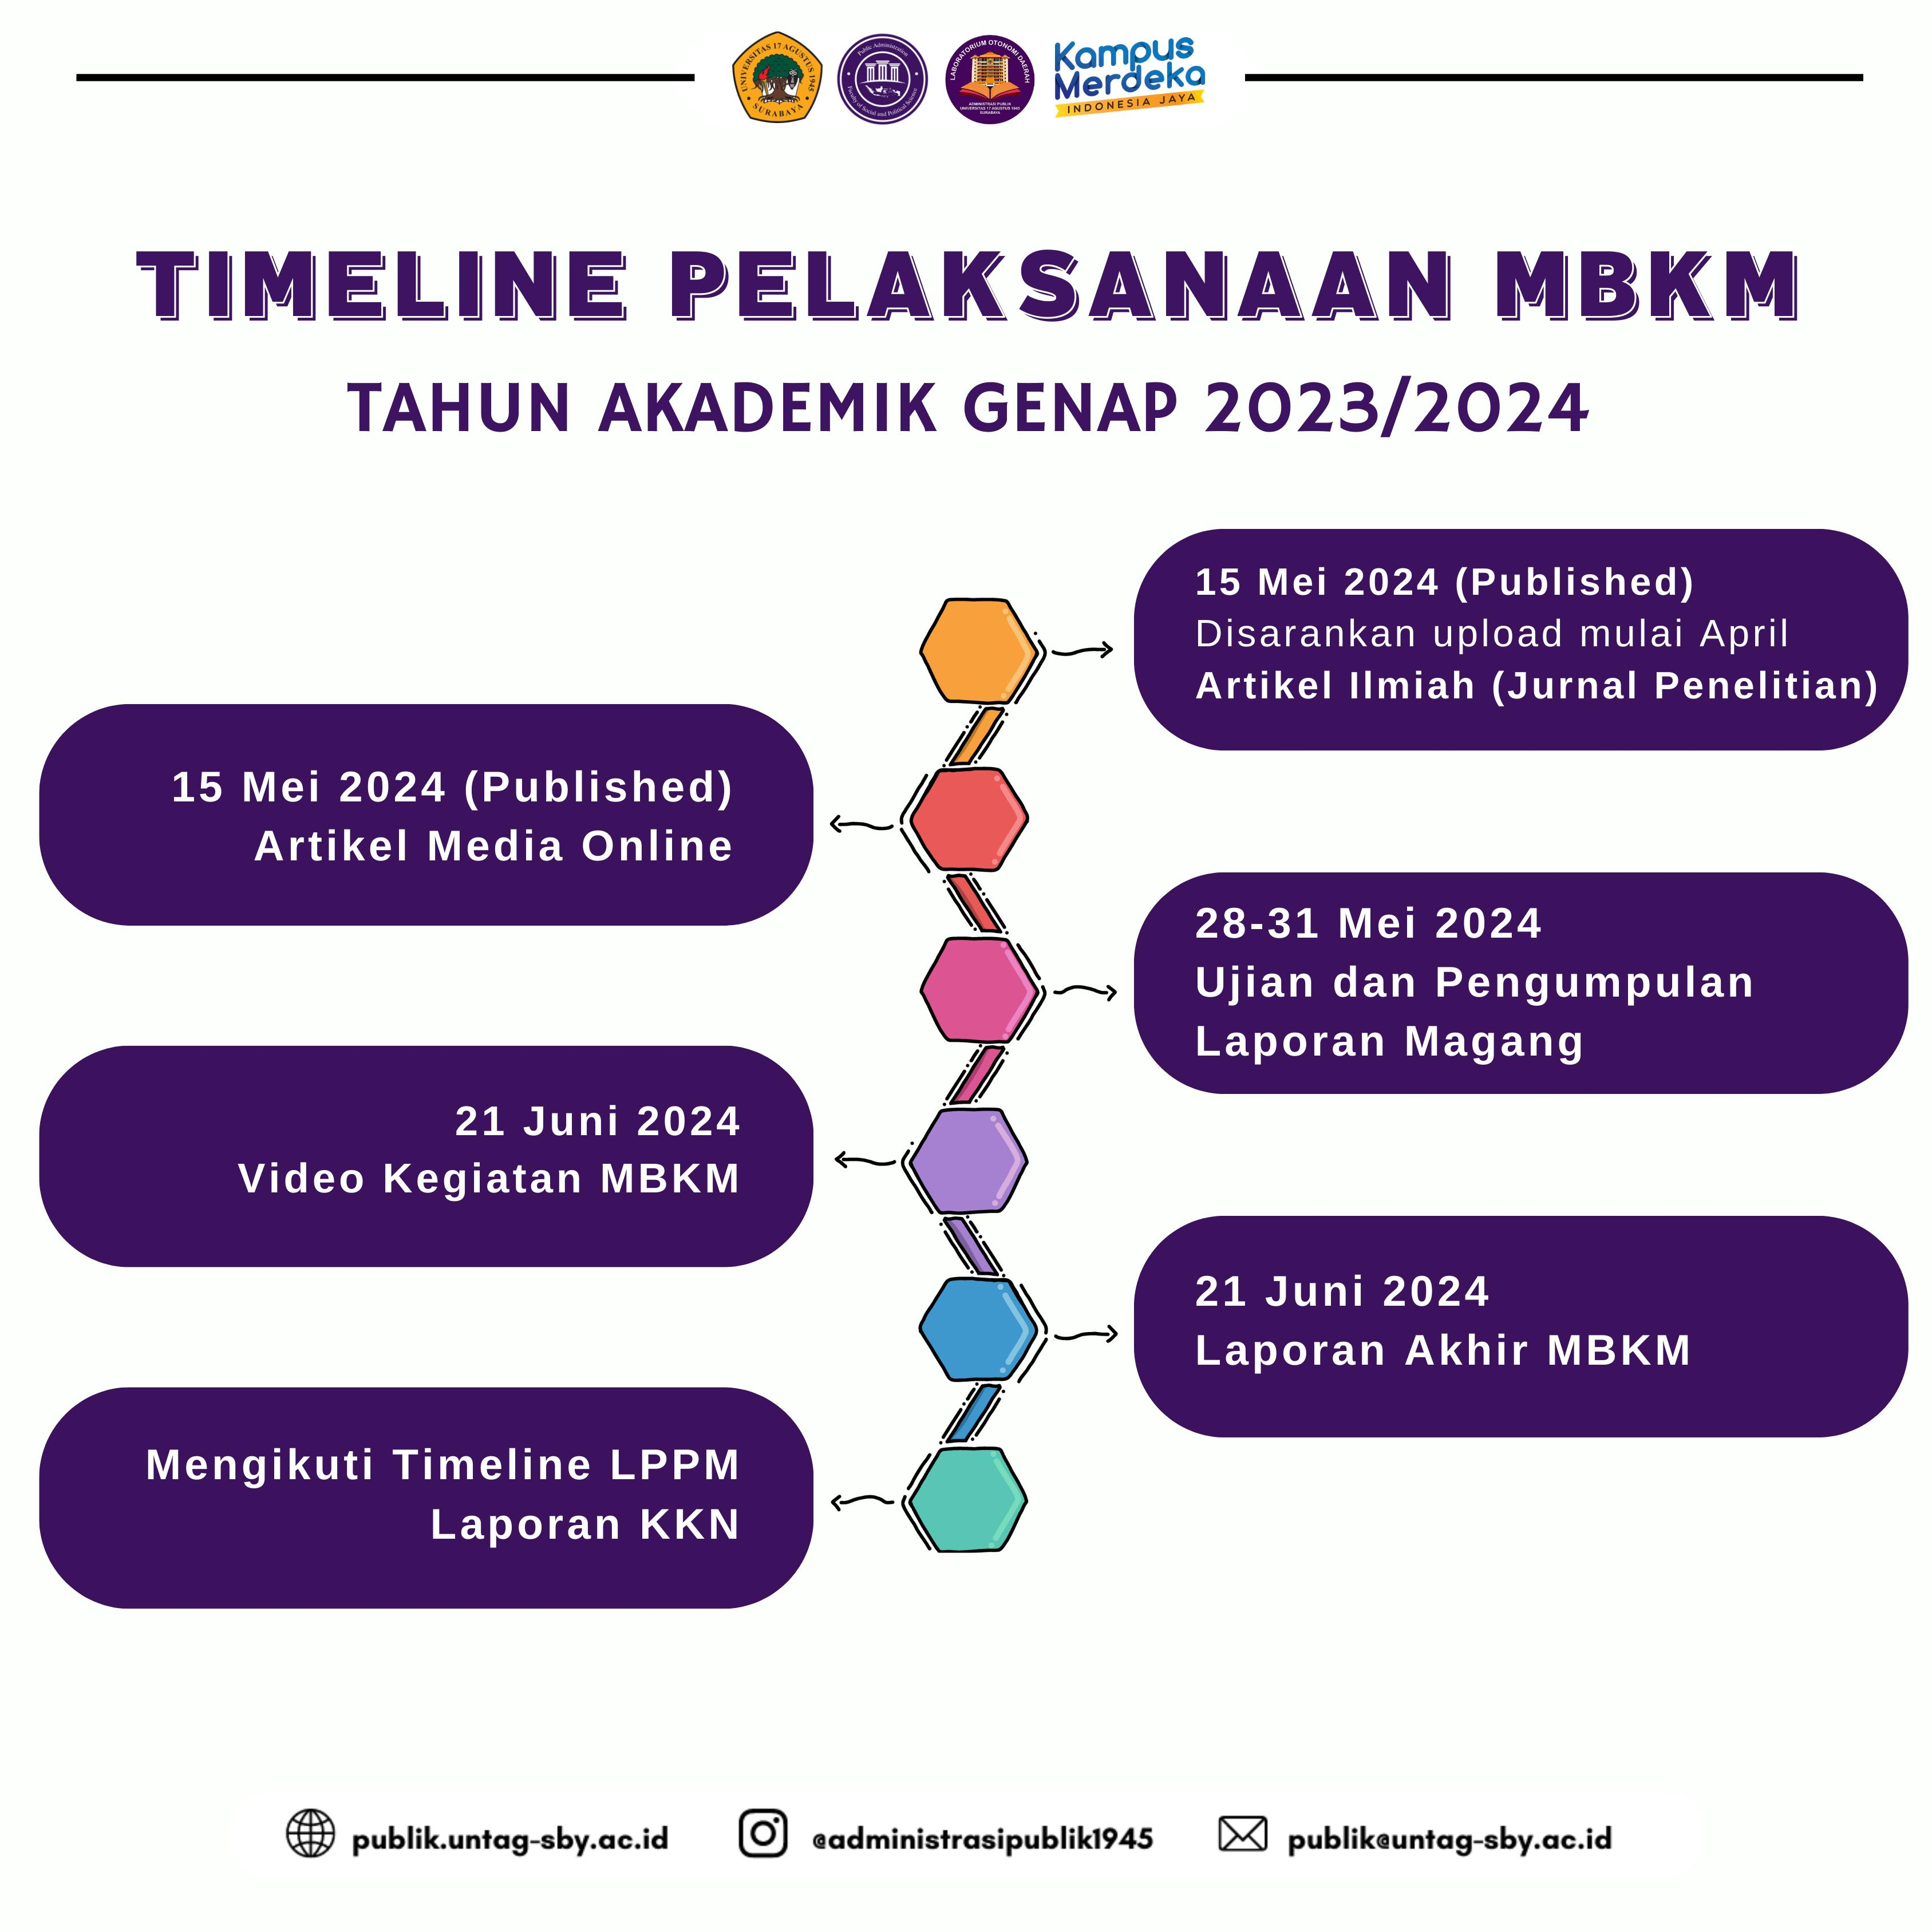 TIMELINE PELAKSANAAN MBKM SEMESTER GENAP 2023/2024